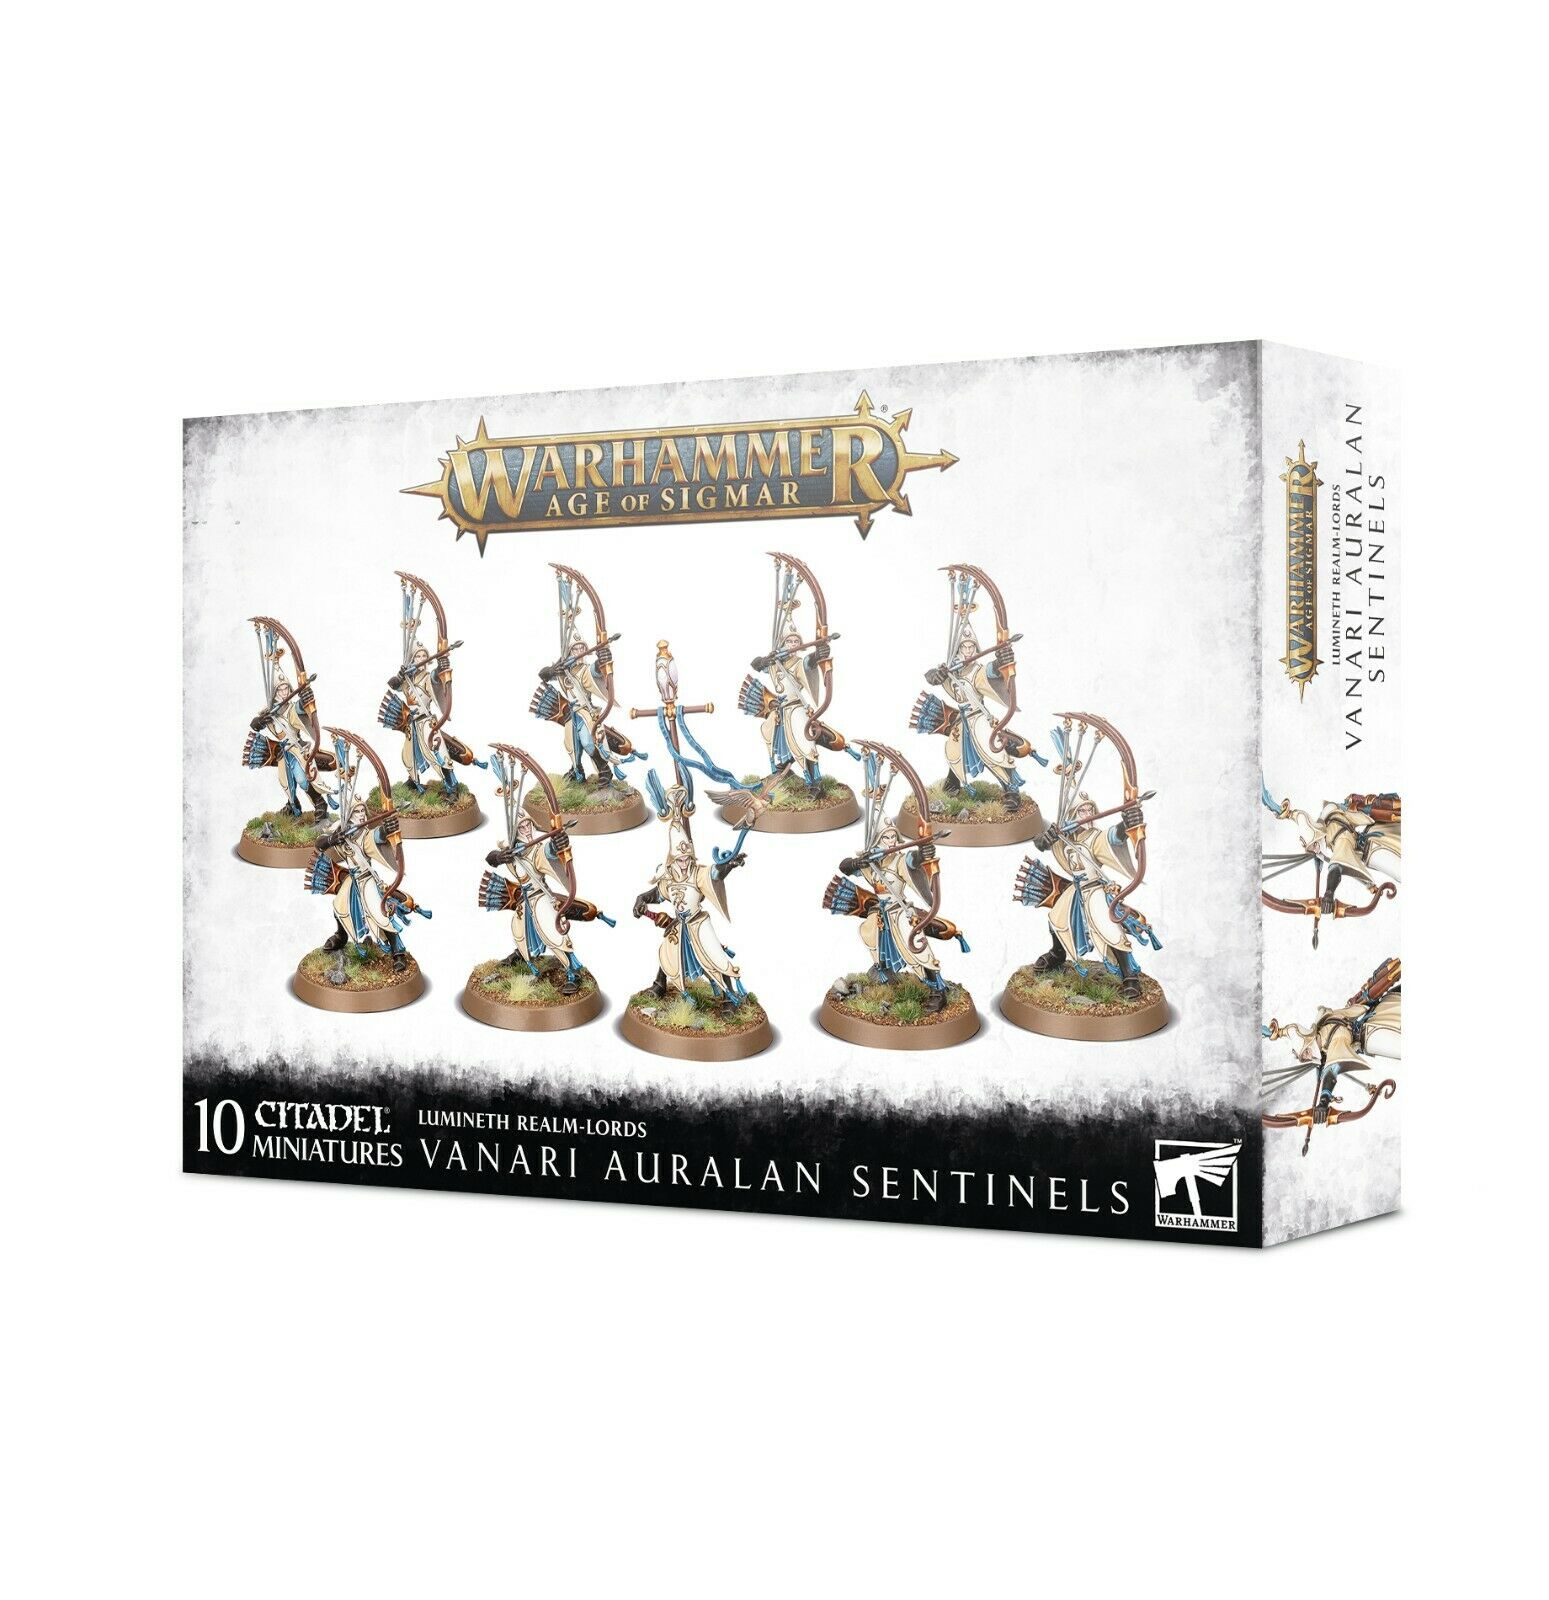 Discount Lumineth Realm-lords Vanari Auralan Sentinels - West Coast Games